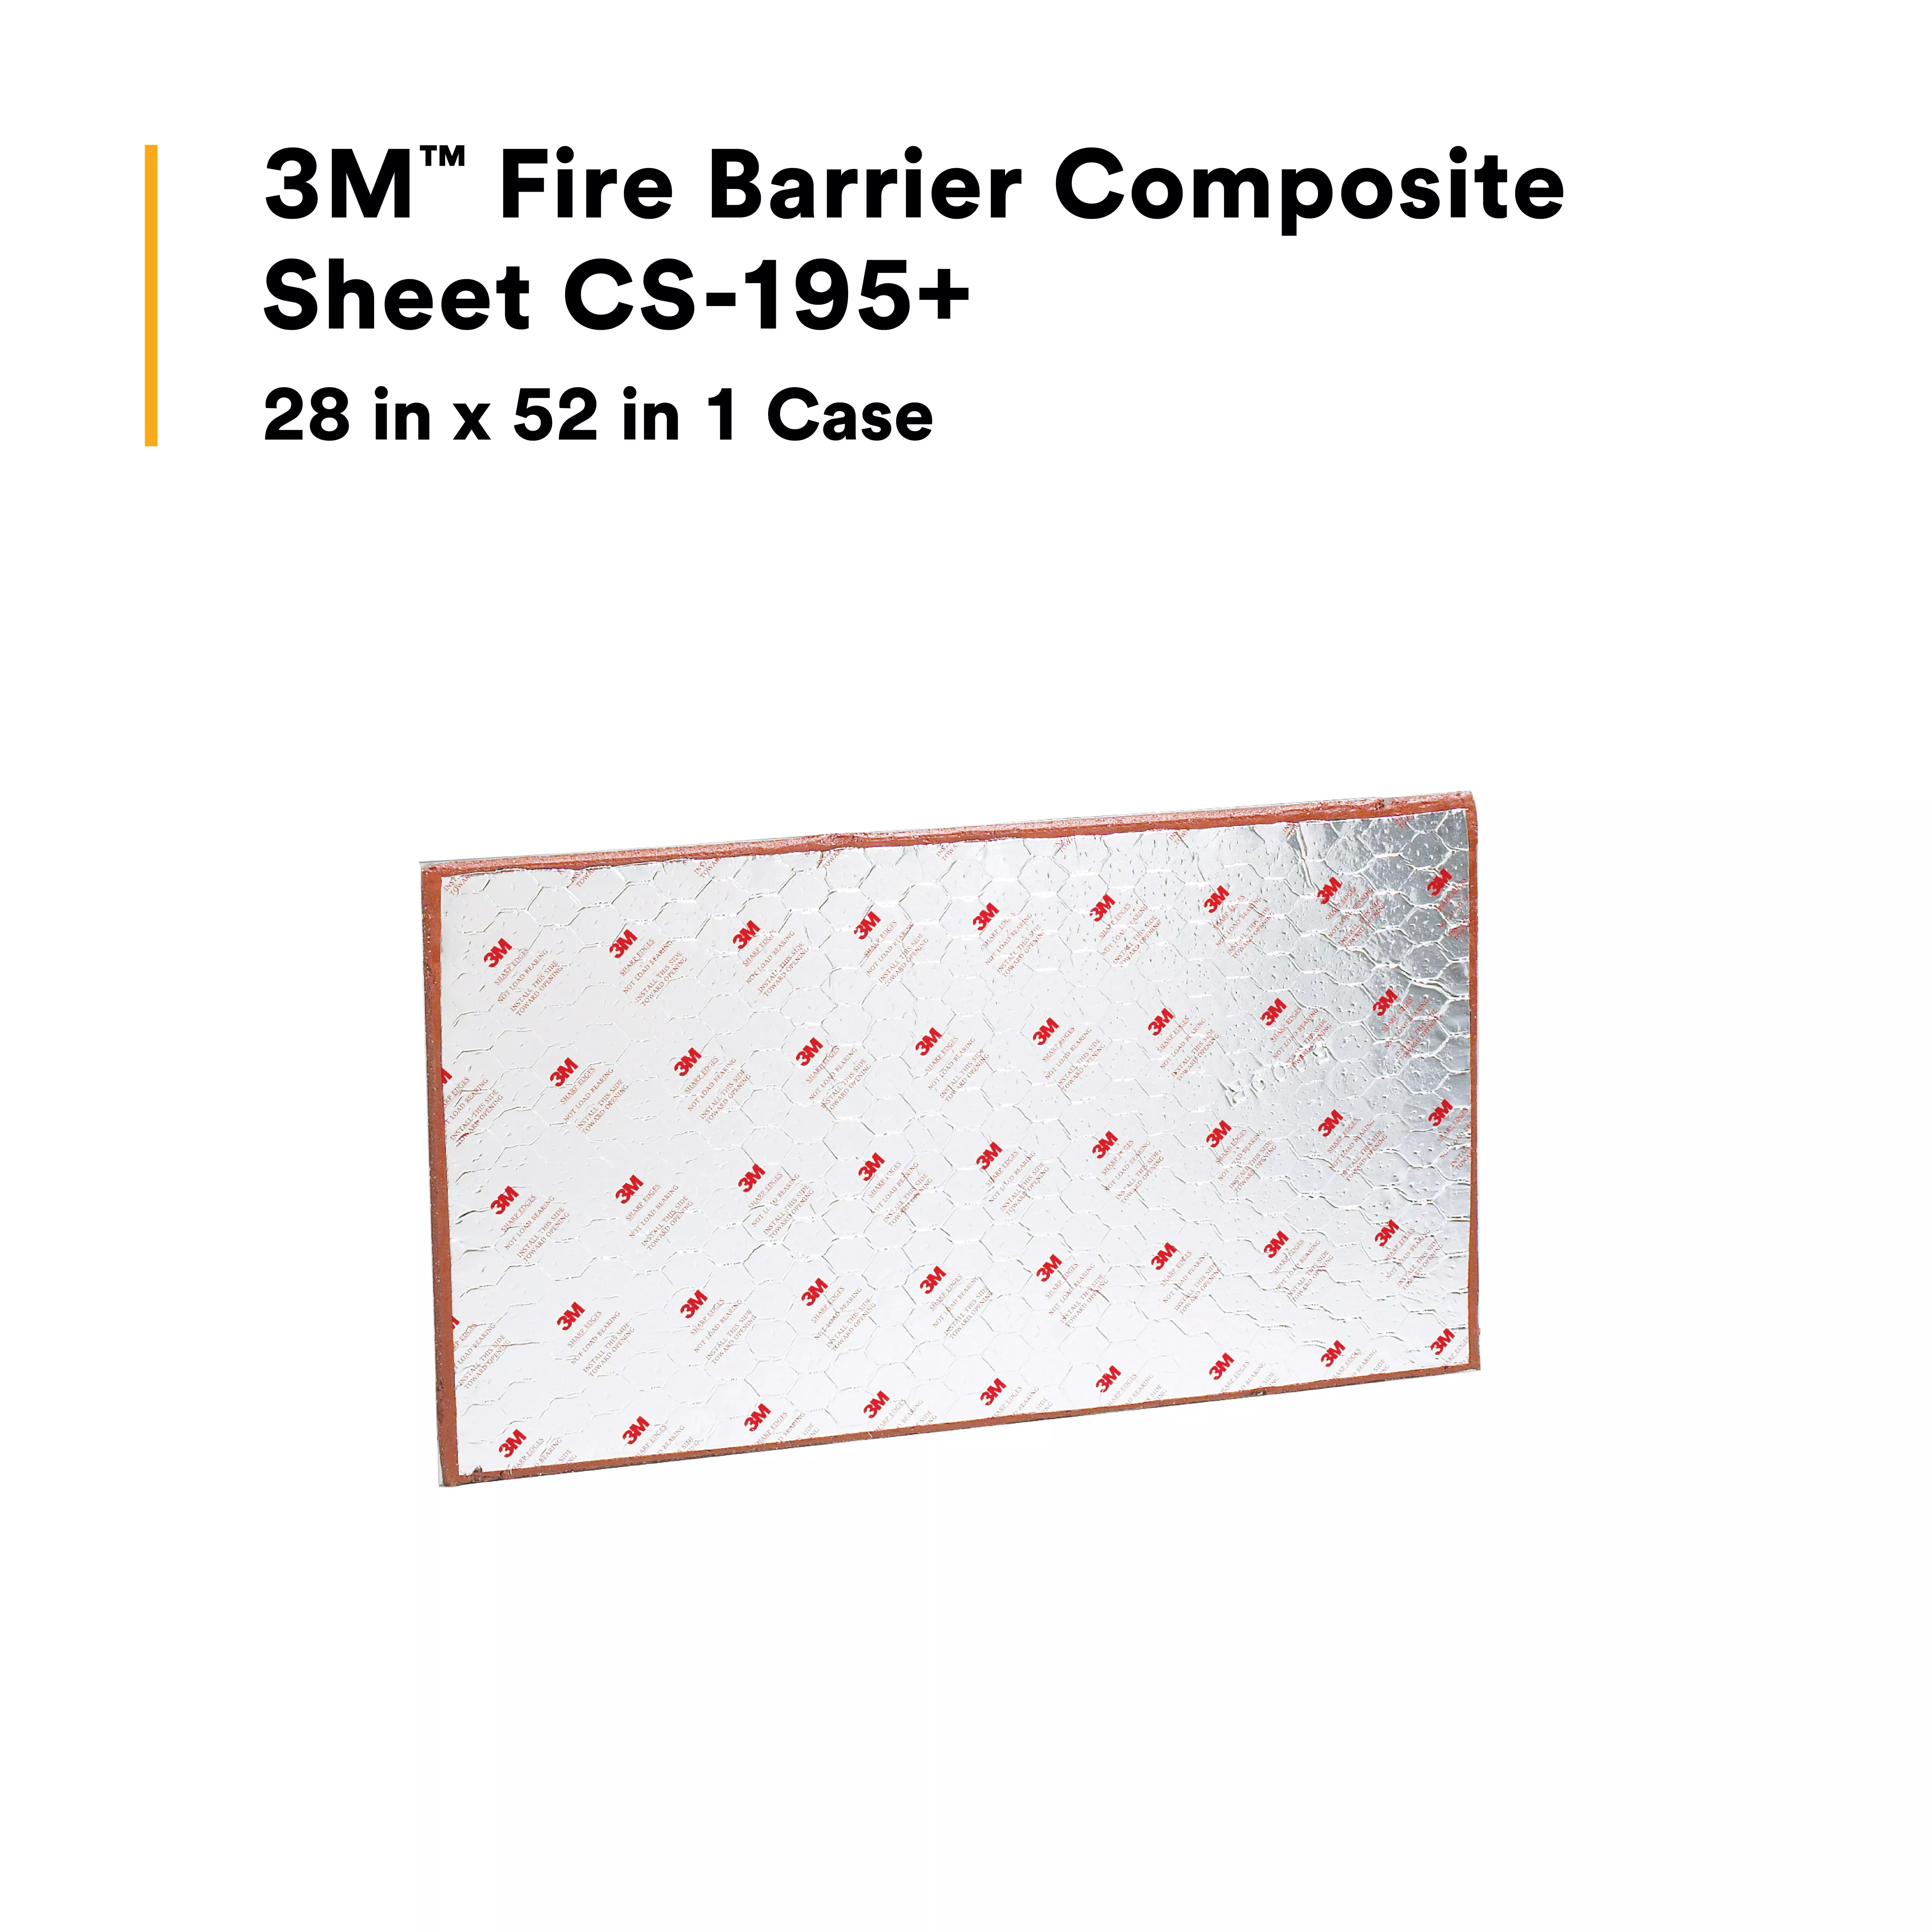 Product Number CS-195+ | 3M™ Fire Barrier Composite Sheet CS-195+